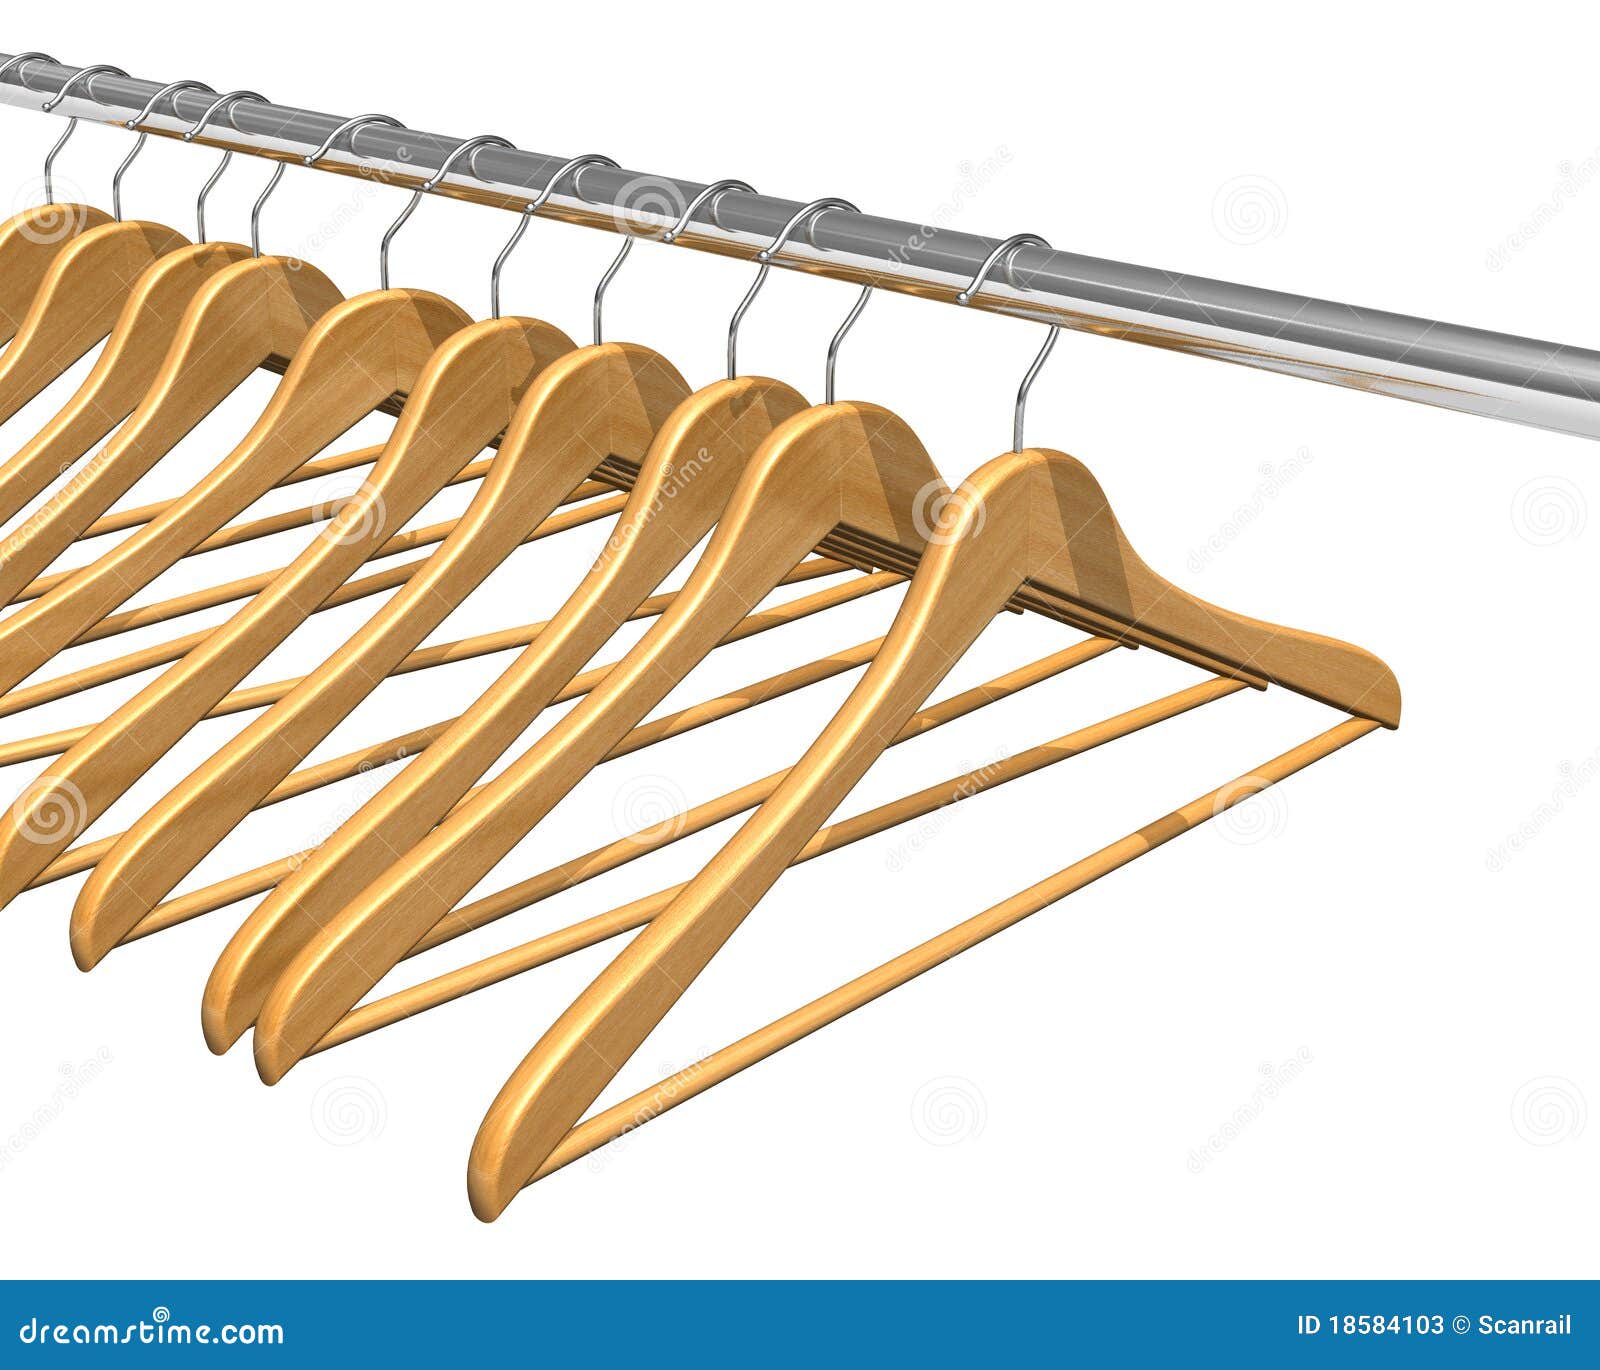 clipart clothes rack - photo #49